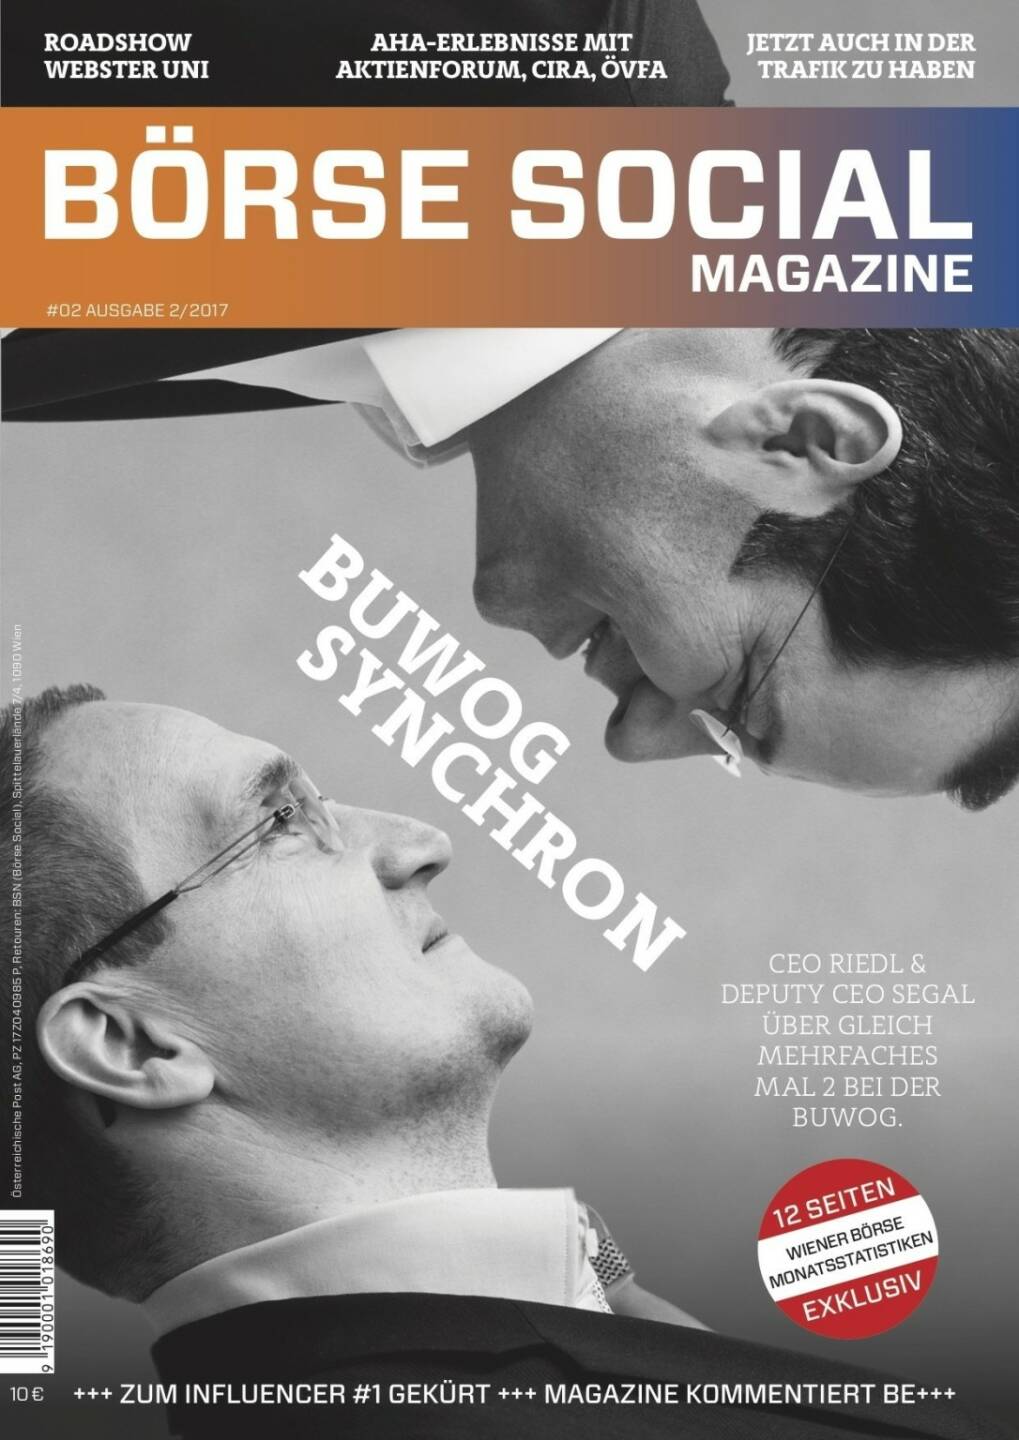 Börse Social Magazine #2 mit Daniel Riedl und Andreas Segal, Buwog, am Cover